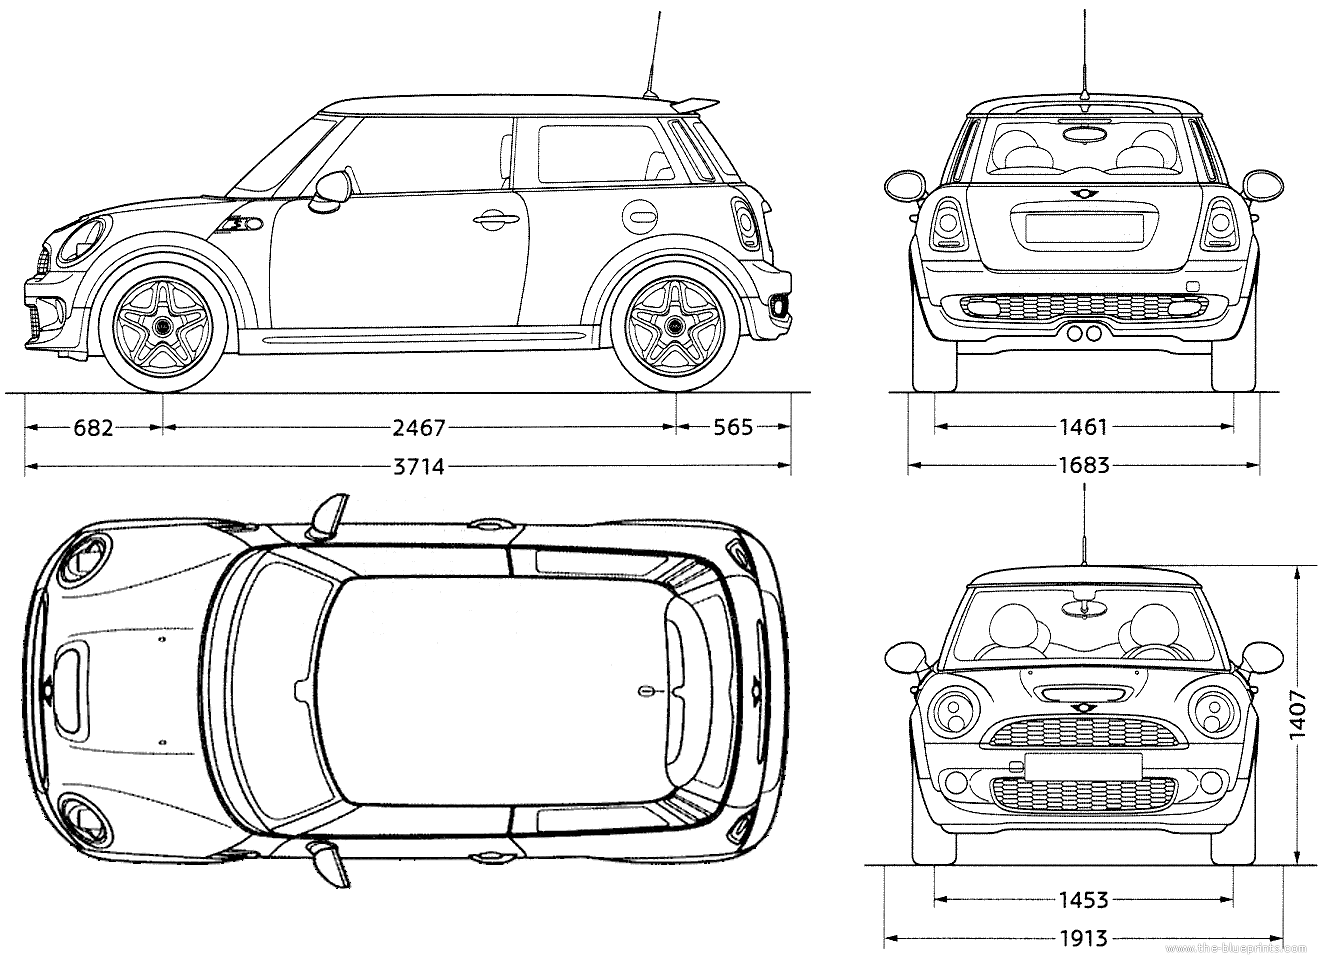 The-Blueprints.com - Blueprints > Cars > Mini > Mini Cooper S (